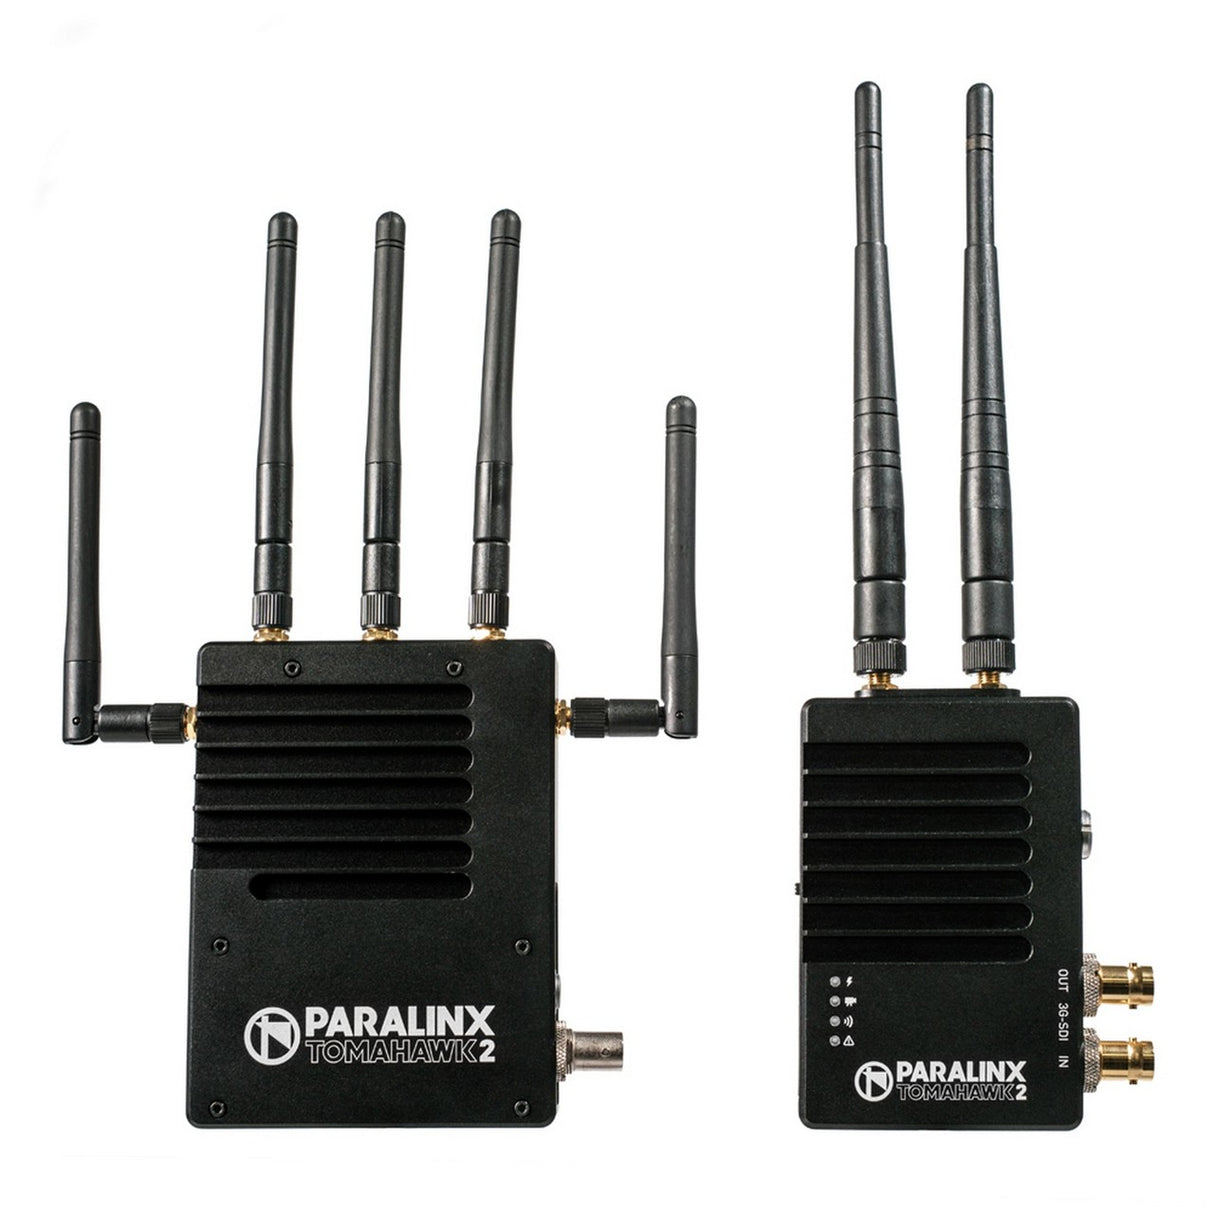 Paralinx Tomahawk2 | 1:1 SDI HDMI Wireless Monitoring Receiver Video System